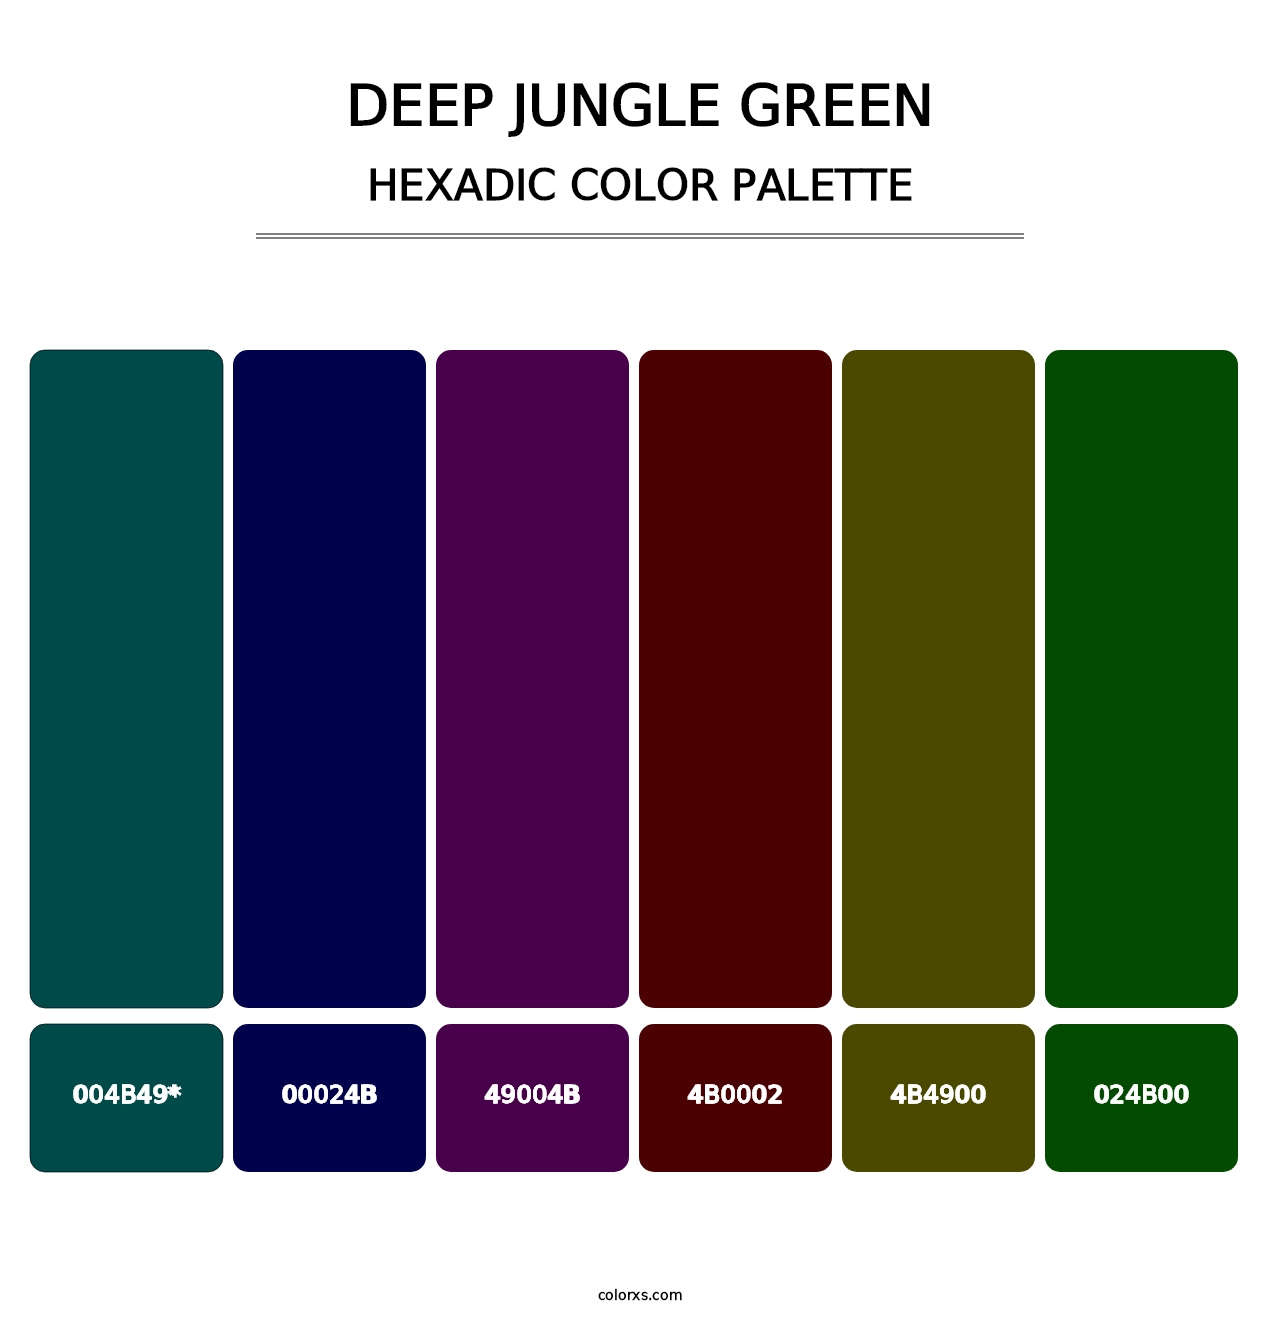 Deep Jungle Green - Hexadic Color Palette